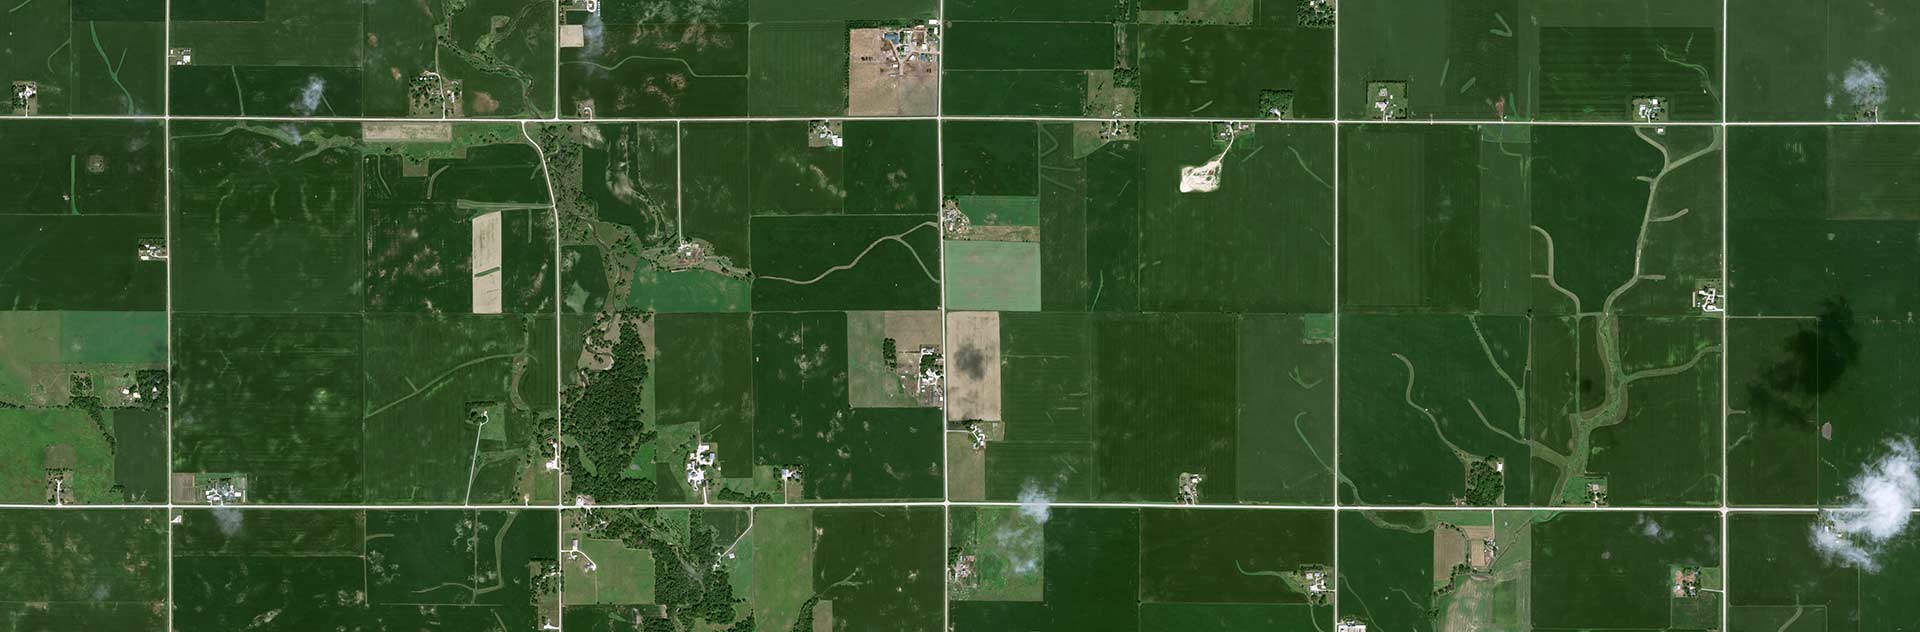 Pléiades Neo satellite image - 30 cm resolution - Corn in Iowa USA - Sustainability